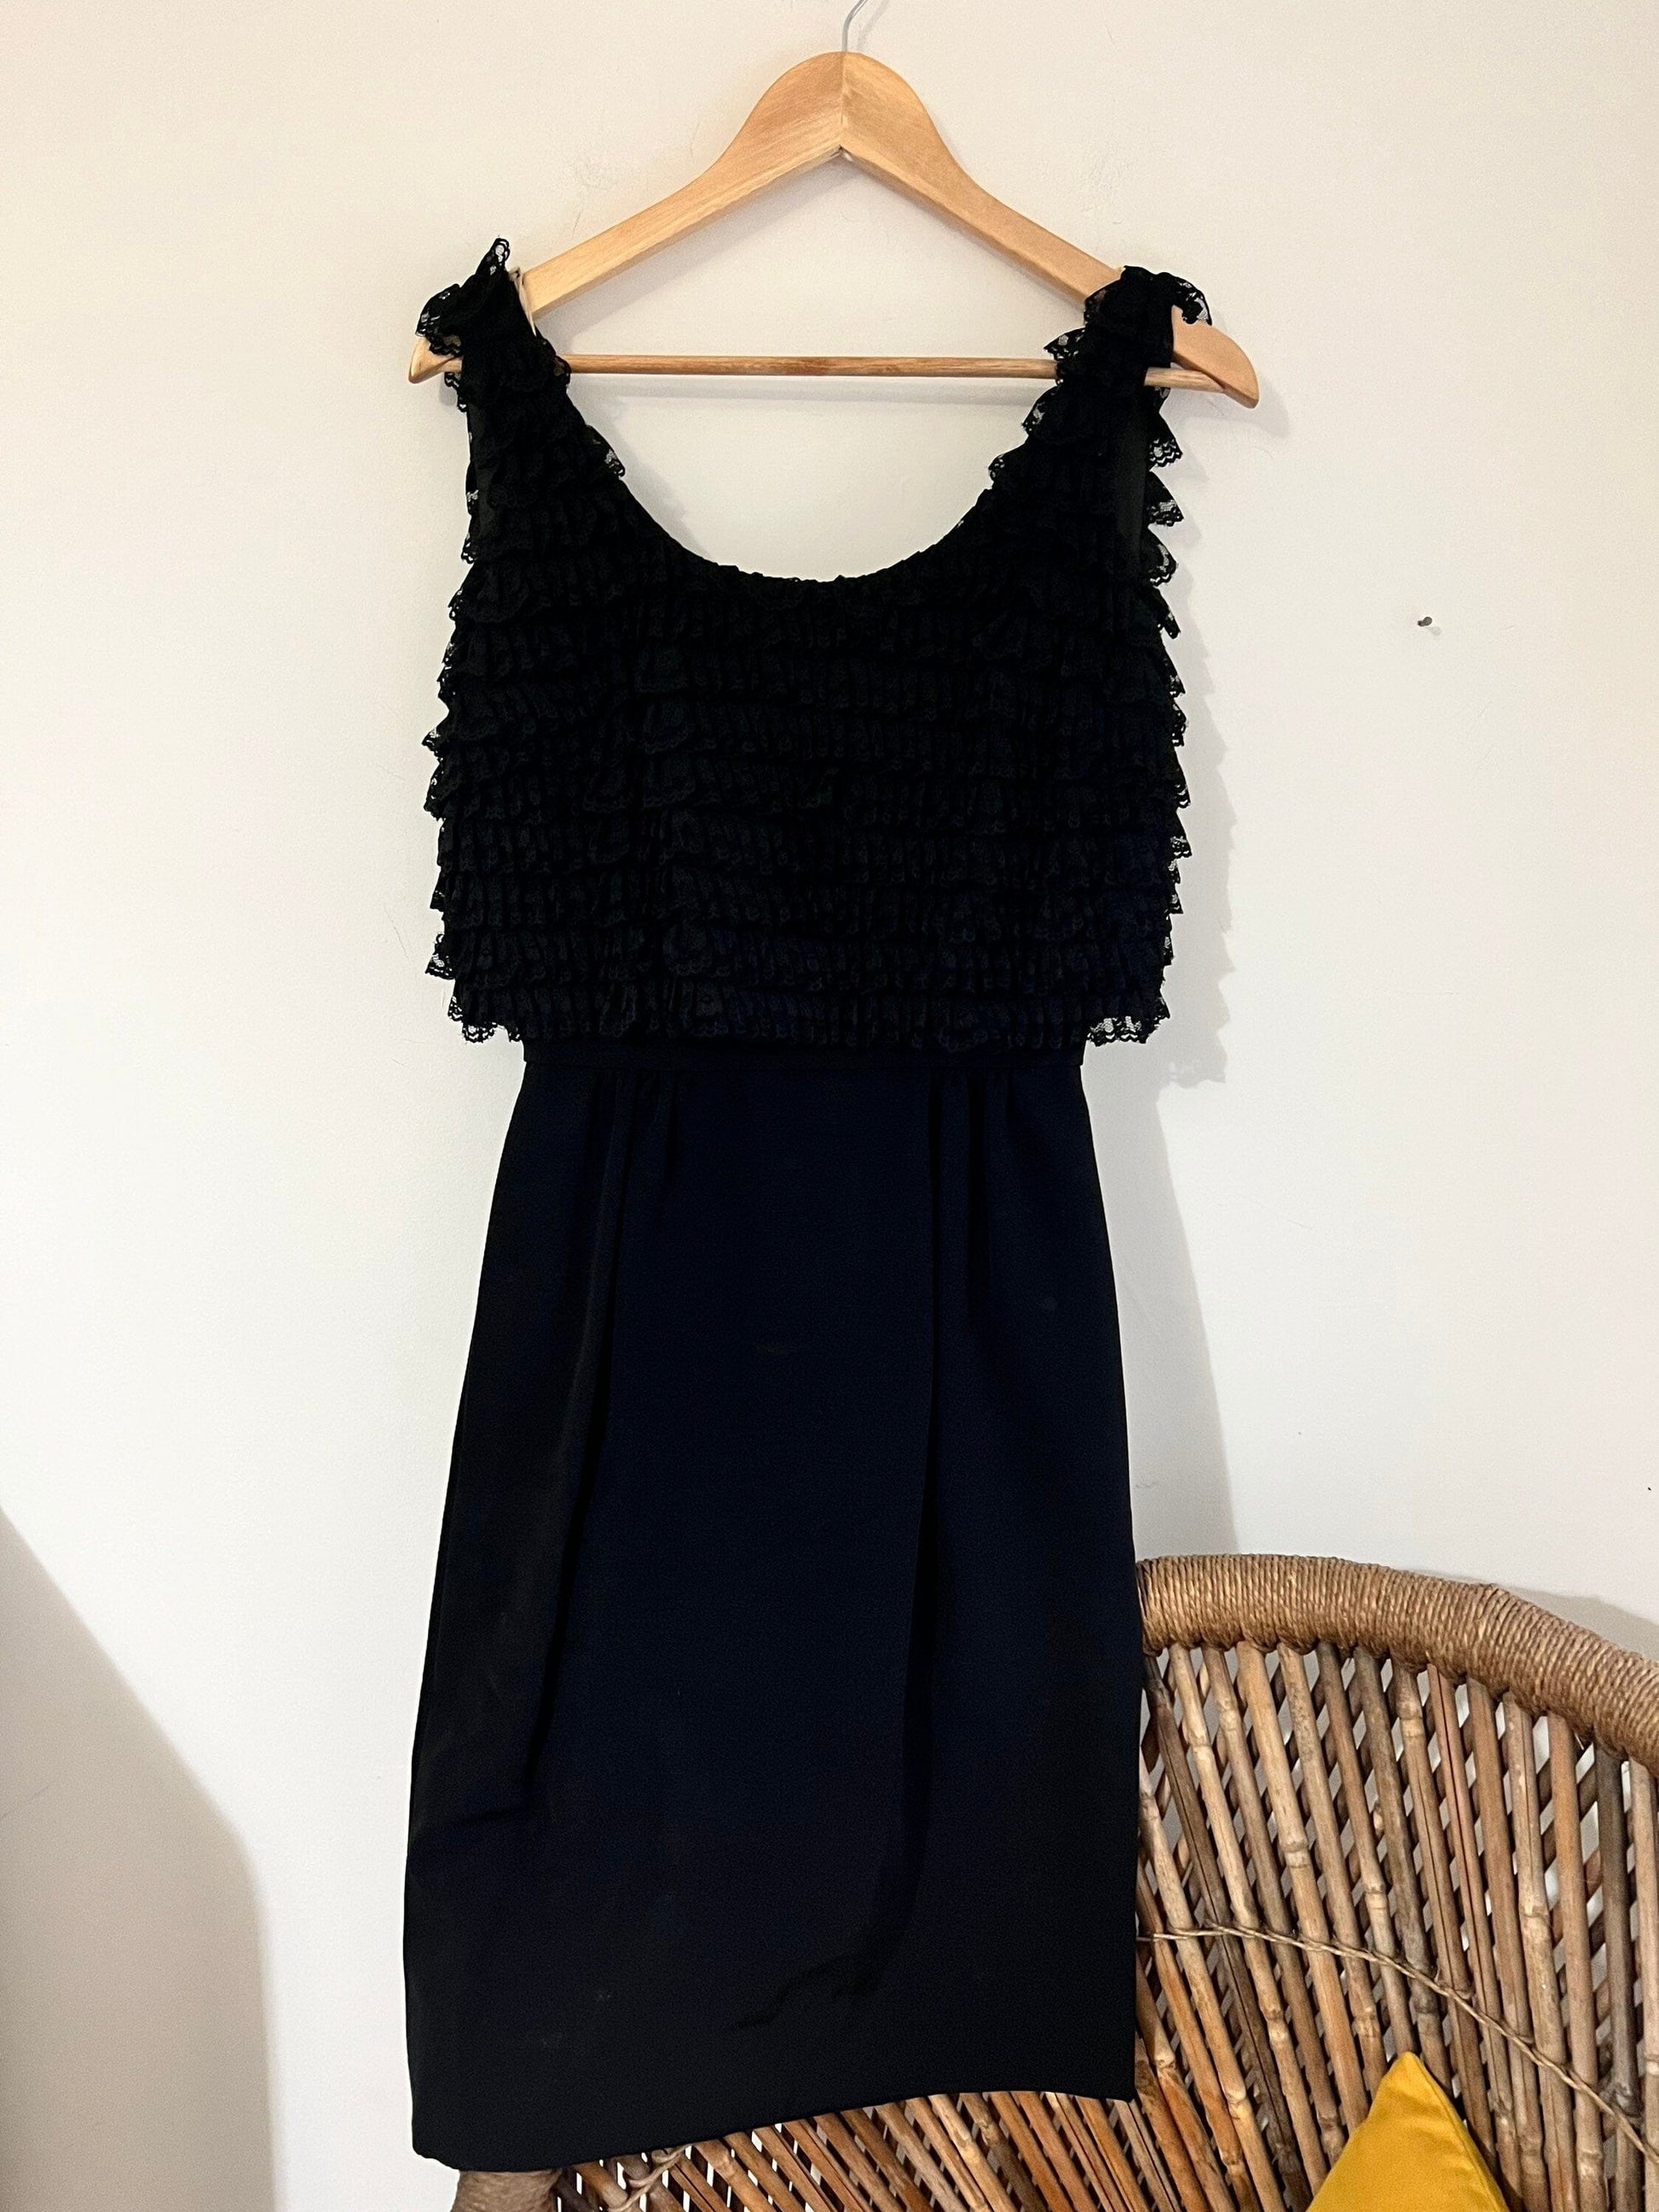 Vintage Black Mini Dress - Ruffled Overlayer Black Shift Dress - 1960s California